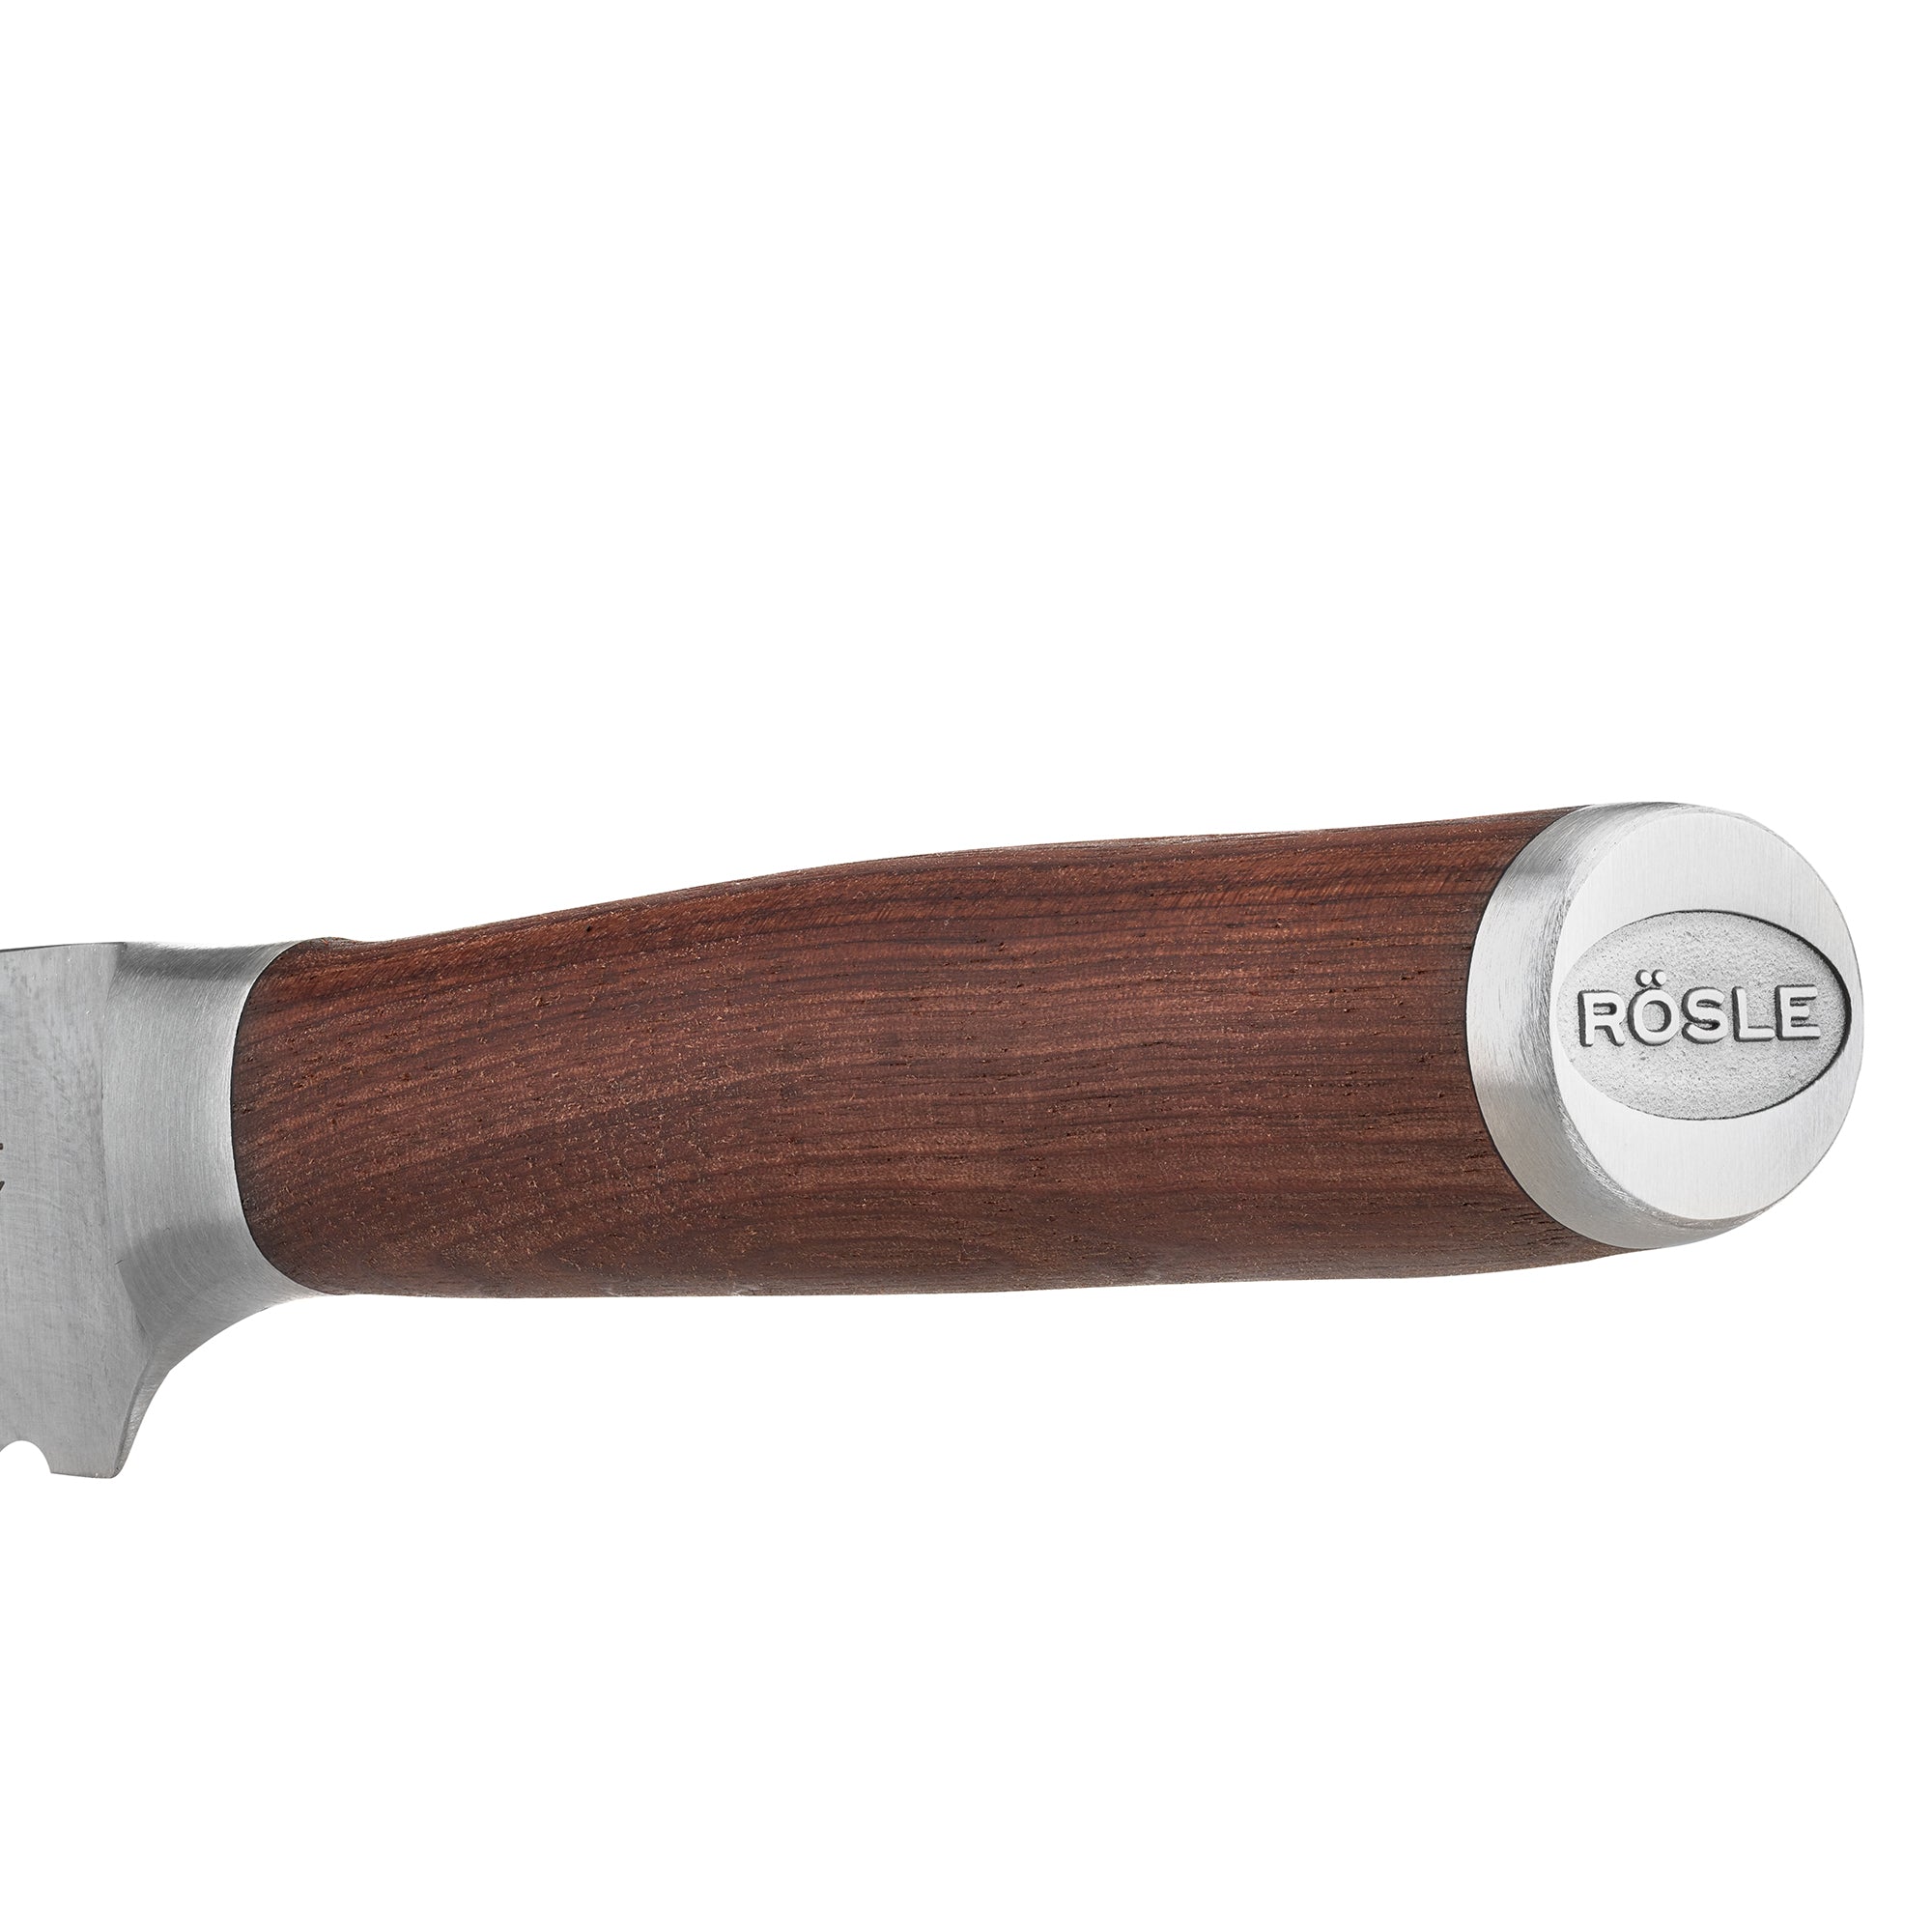 Rösle - Masterclass 12cm (4.7") Serrated Utility Knife